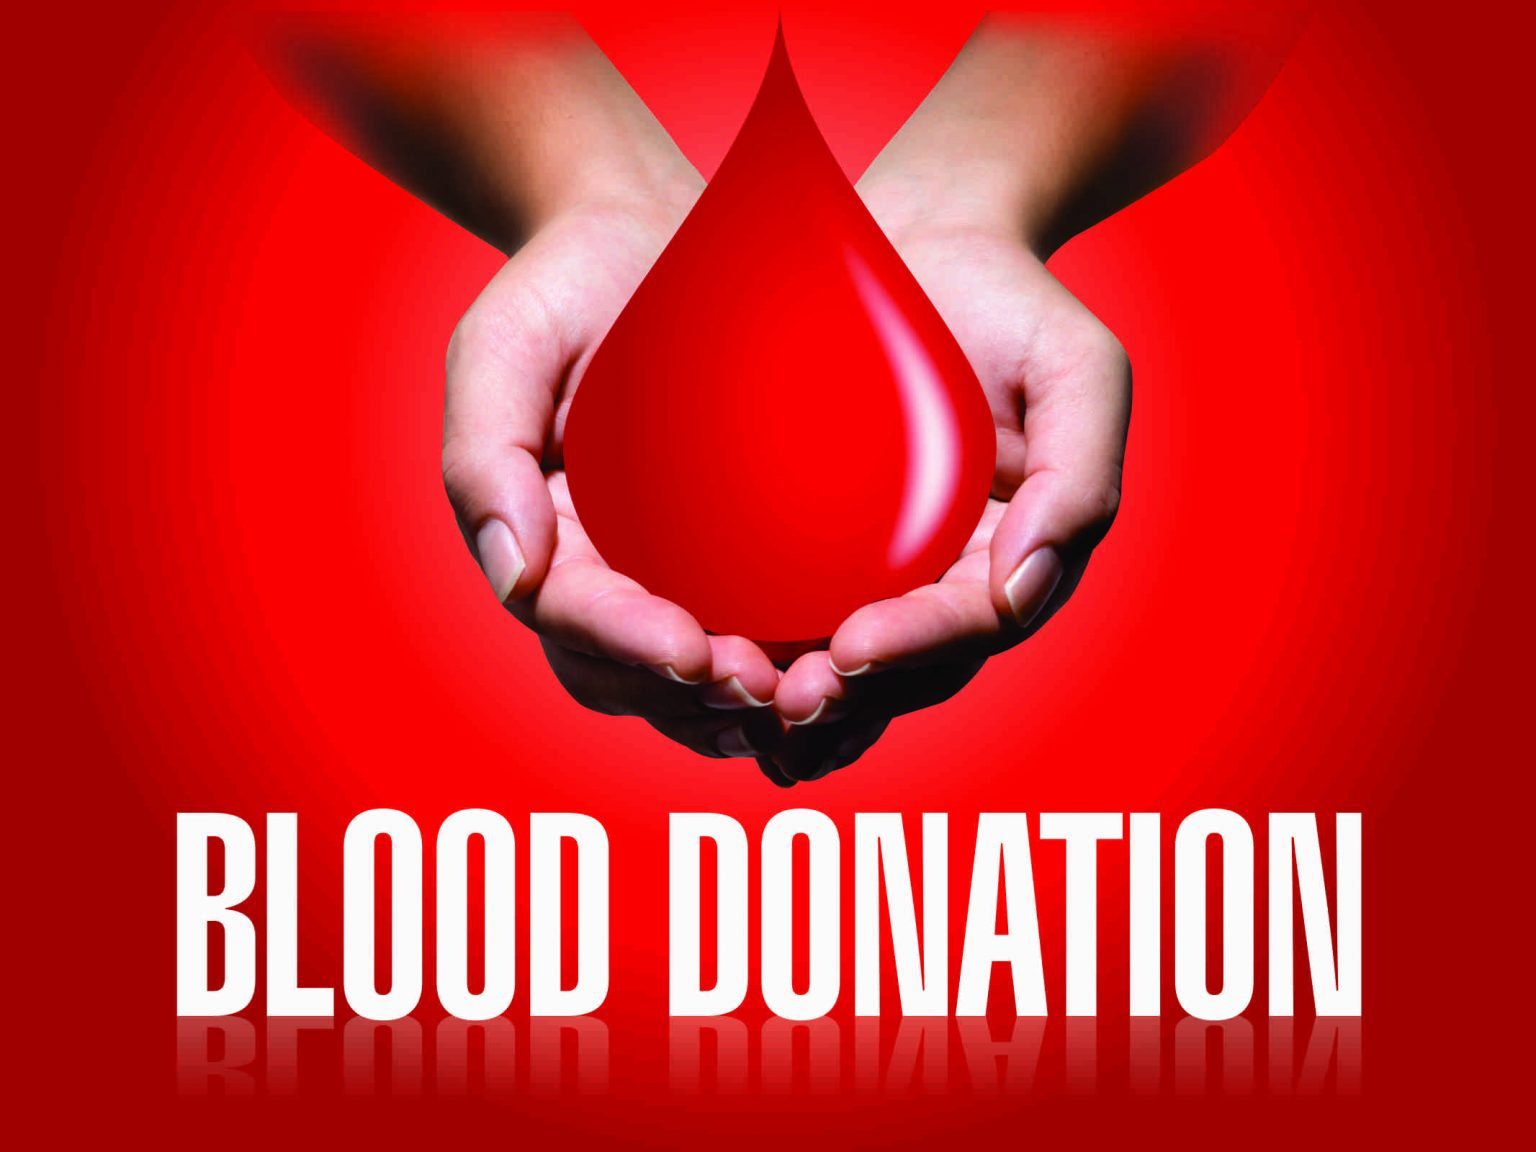 Blood donation quotes in hindi | रक्तदान पर 20 बेहतरीन अनमोल कथन